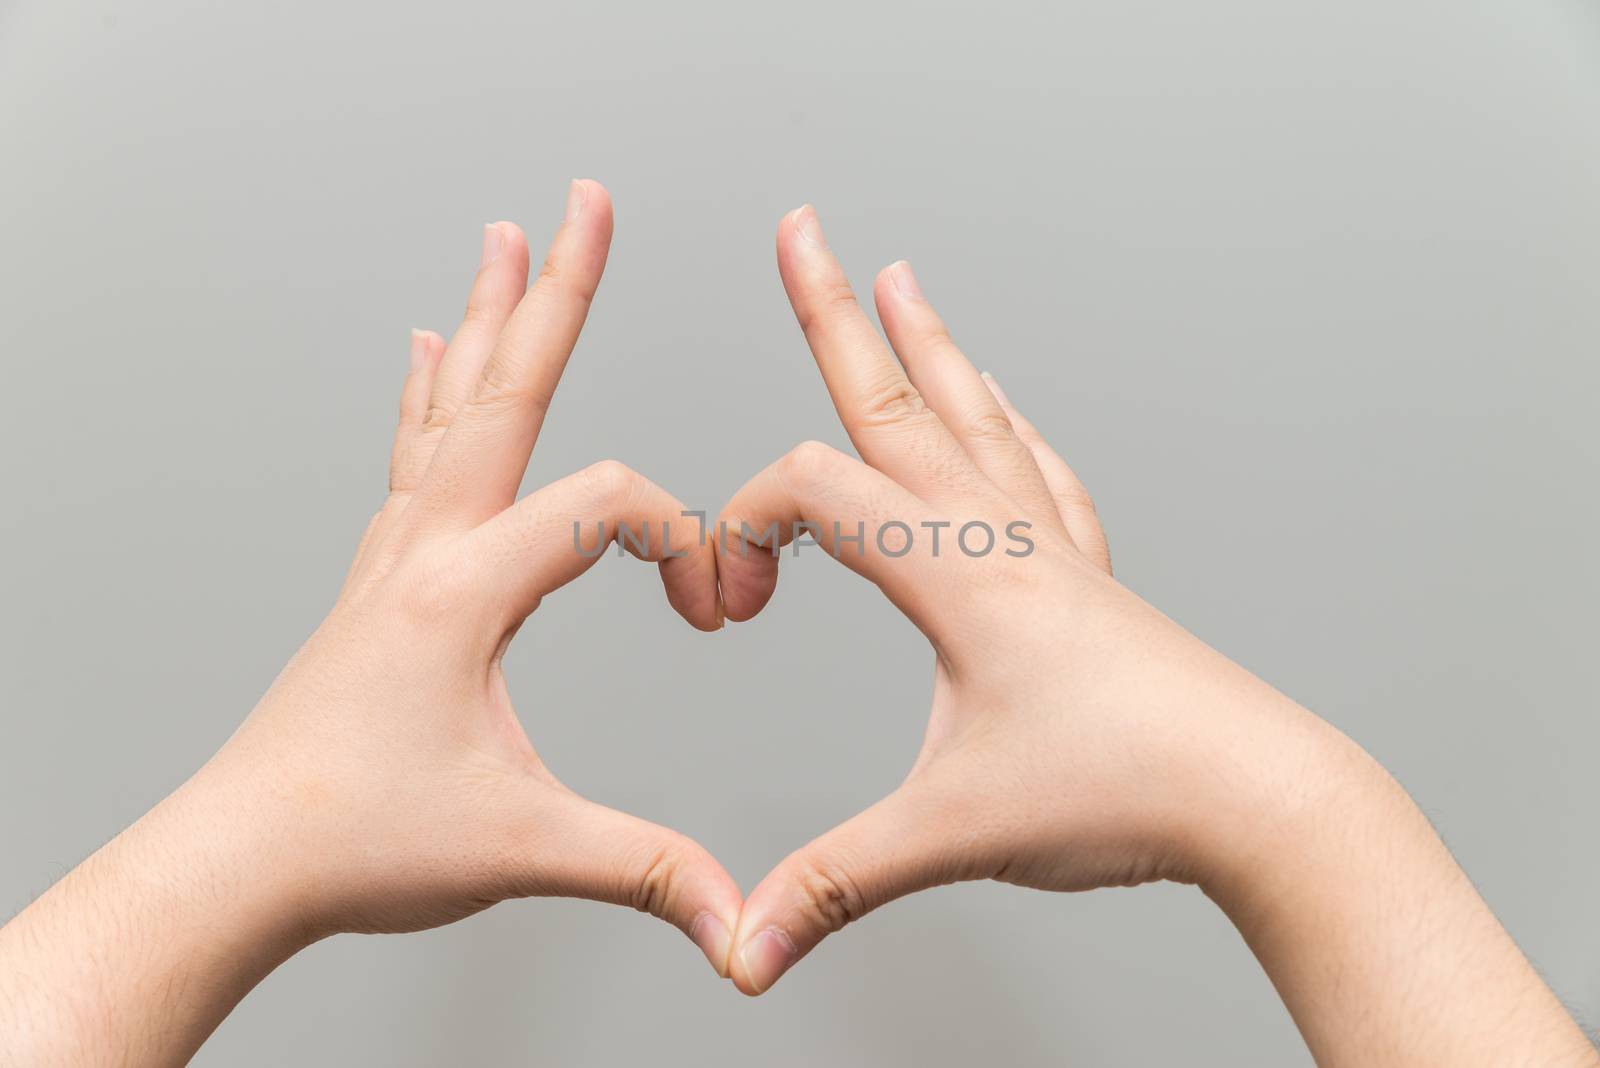 Human hands making a heart shape on light gray background